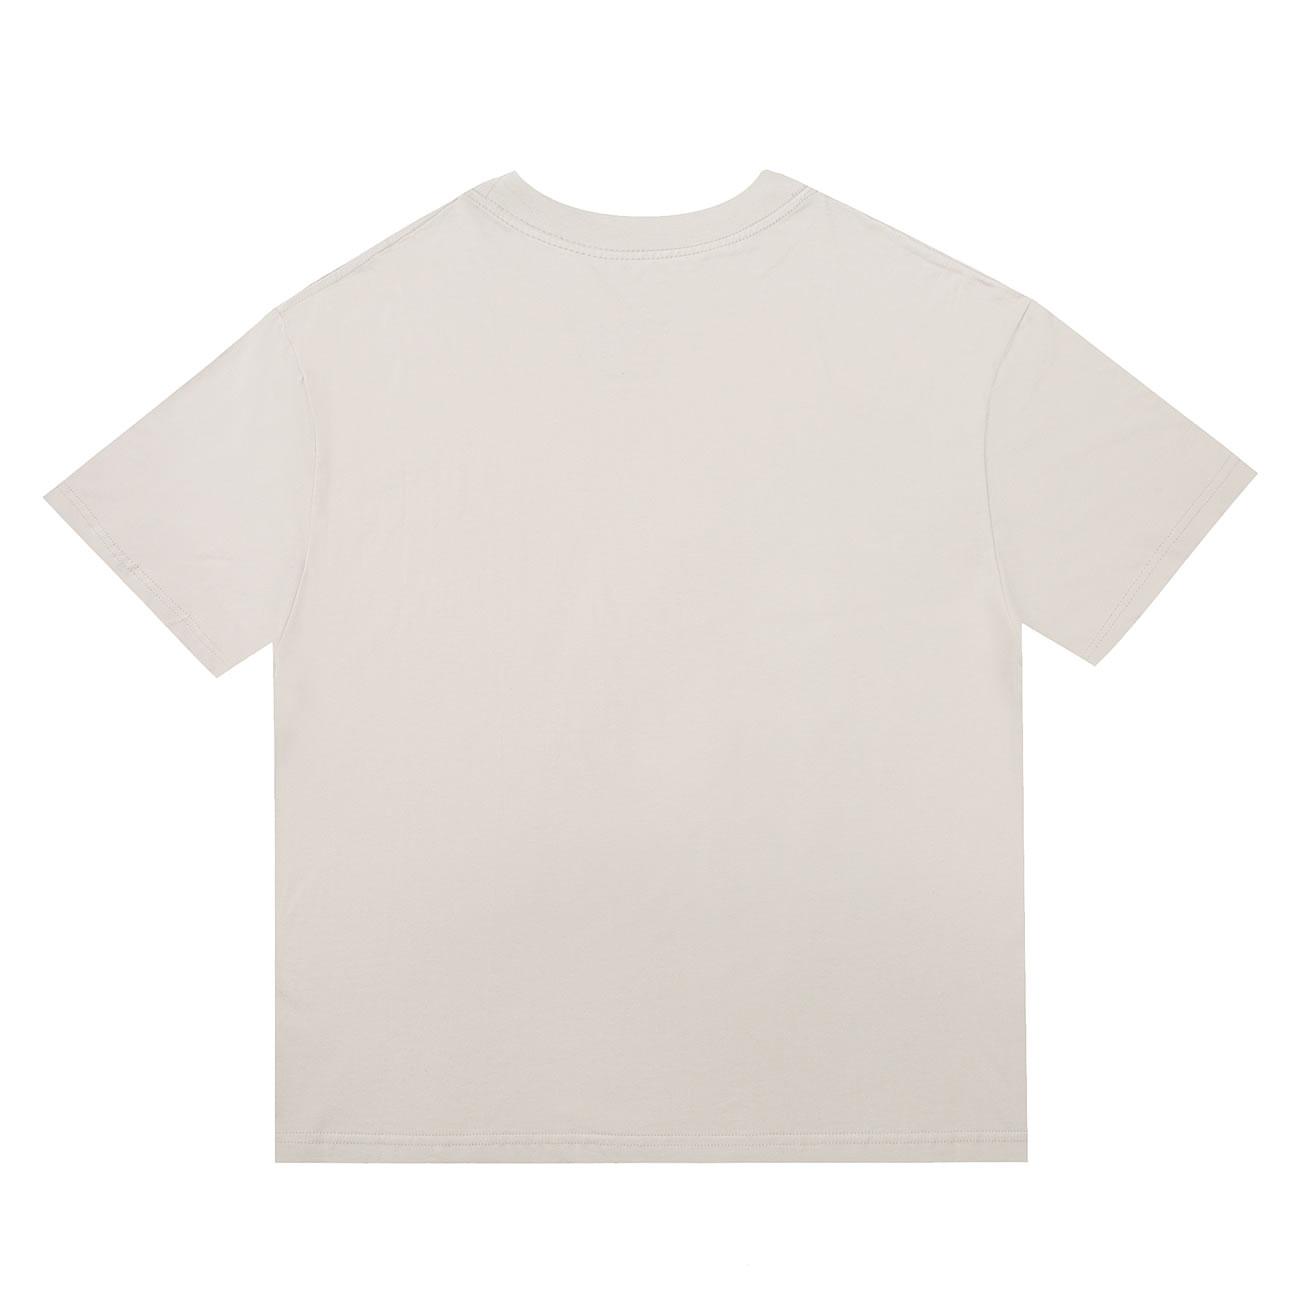 Kanye New T Shirts For Sale White (2) - newkick.org